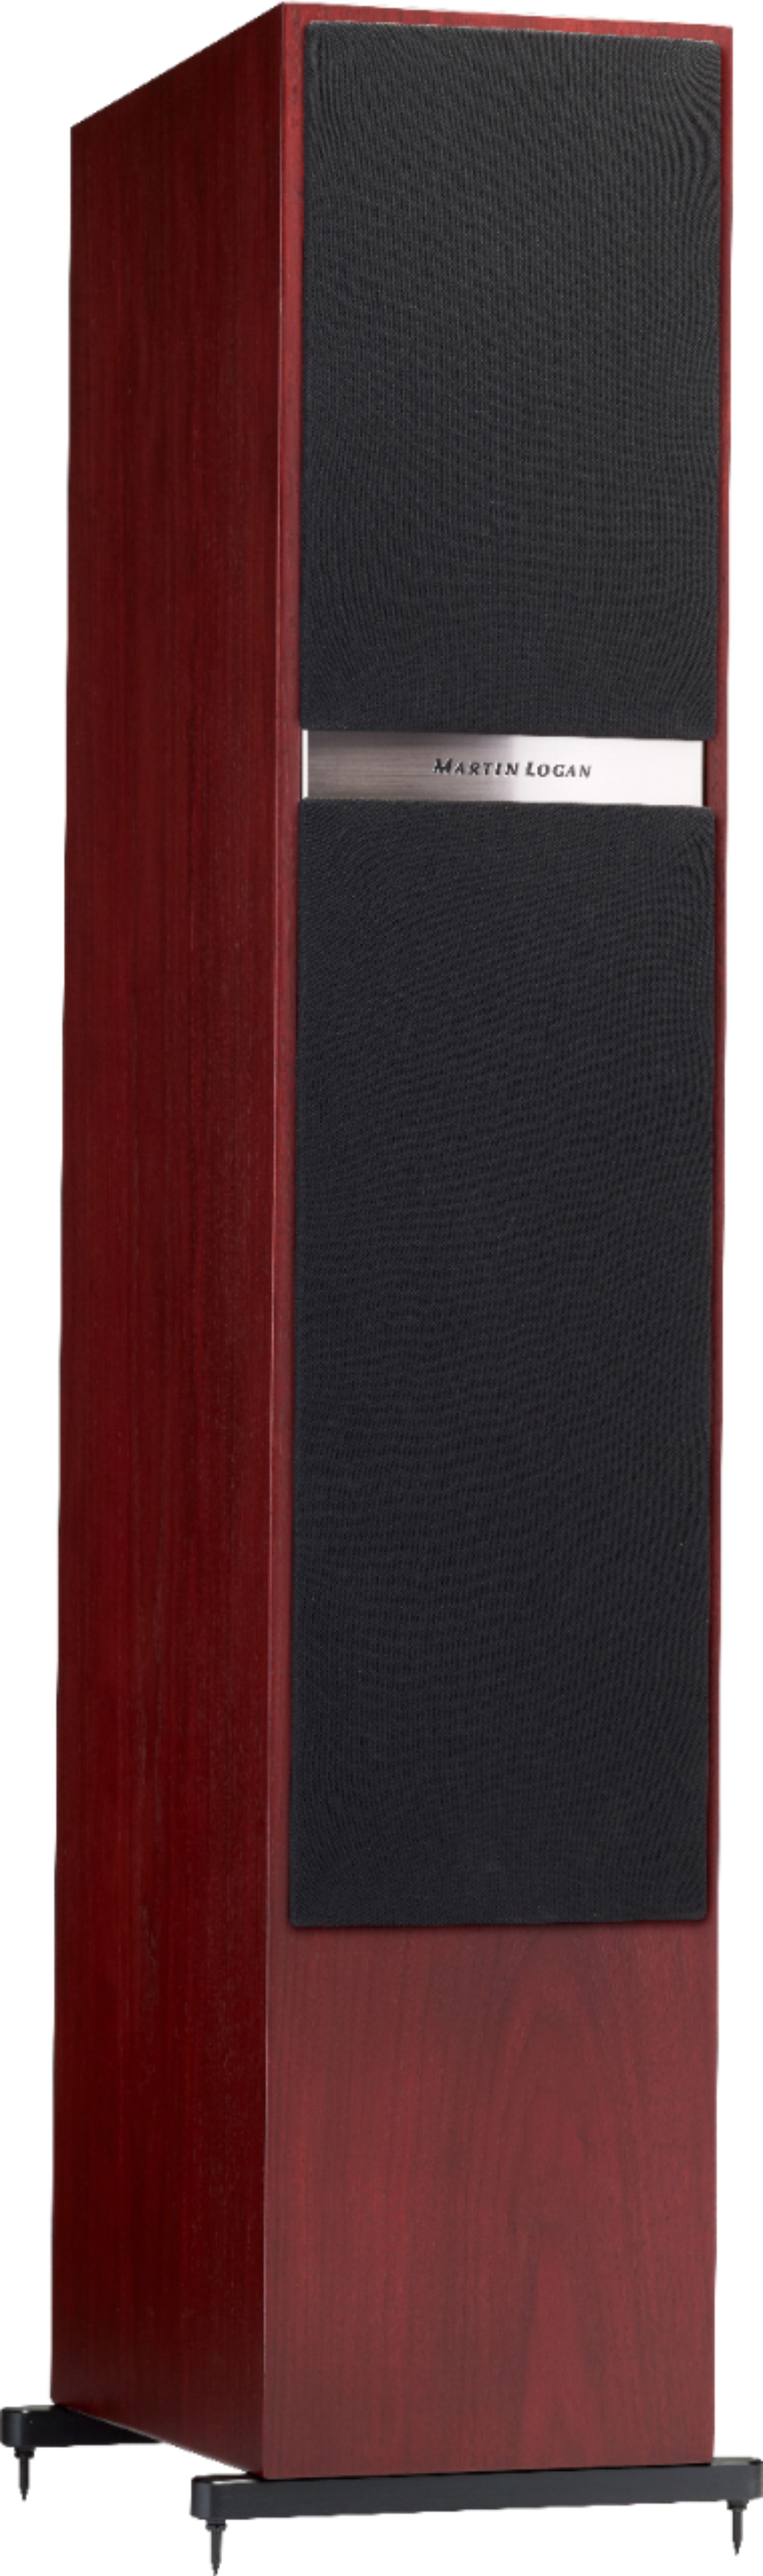 Angle View: Bowers & Wilkins - 700 Series 3-way Floorstanding Speaker w/5" midrange, dual 5" bass (each) - White